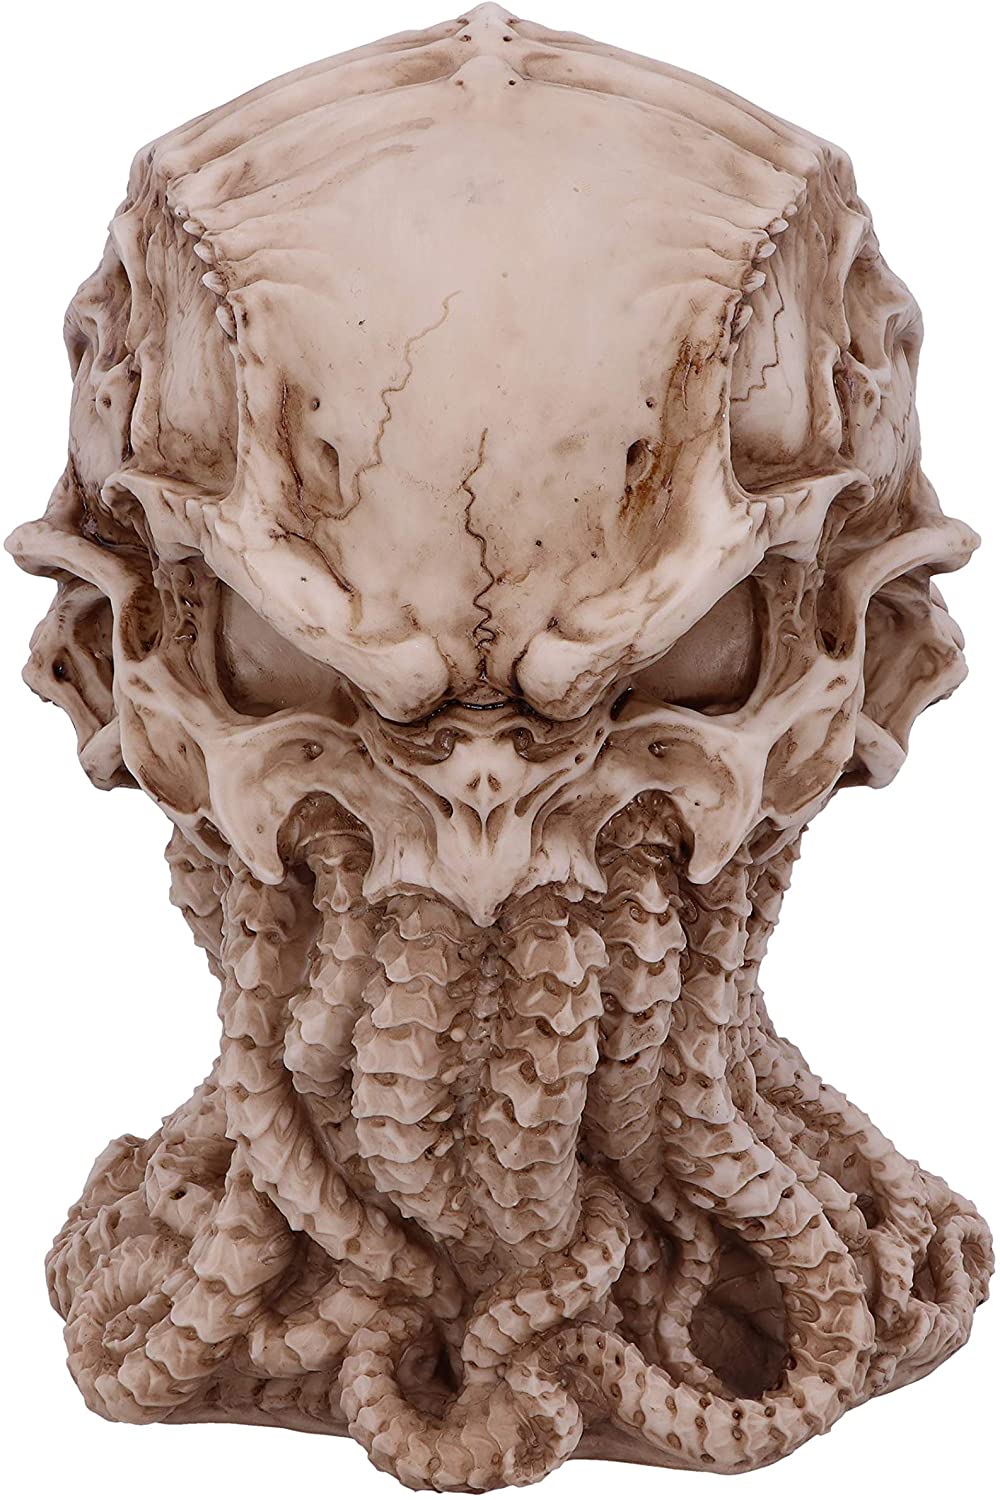 Cthulhu - Figurine d'ornement Crâne de Cthulhu 20cm